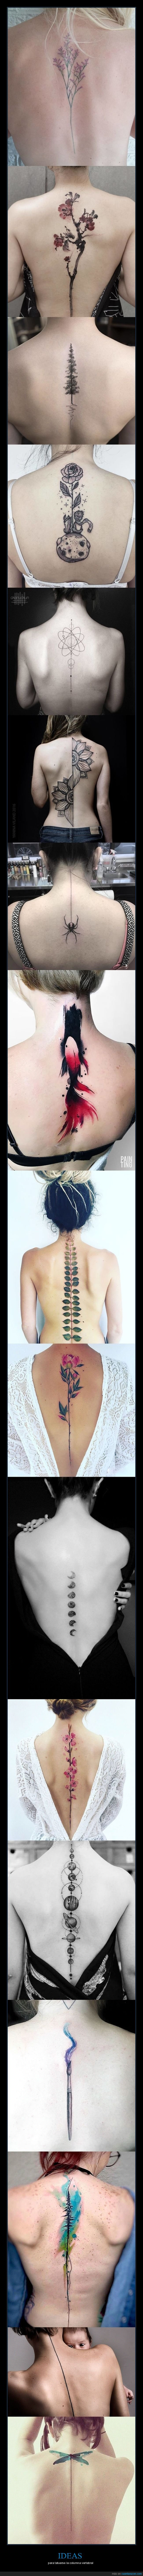 tatuajes,columna vertebral,espalda